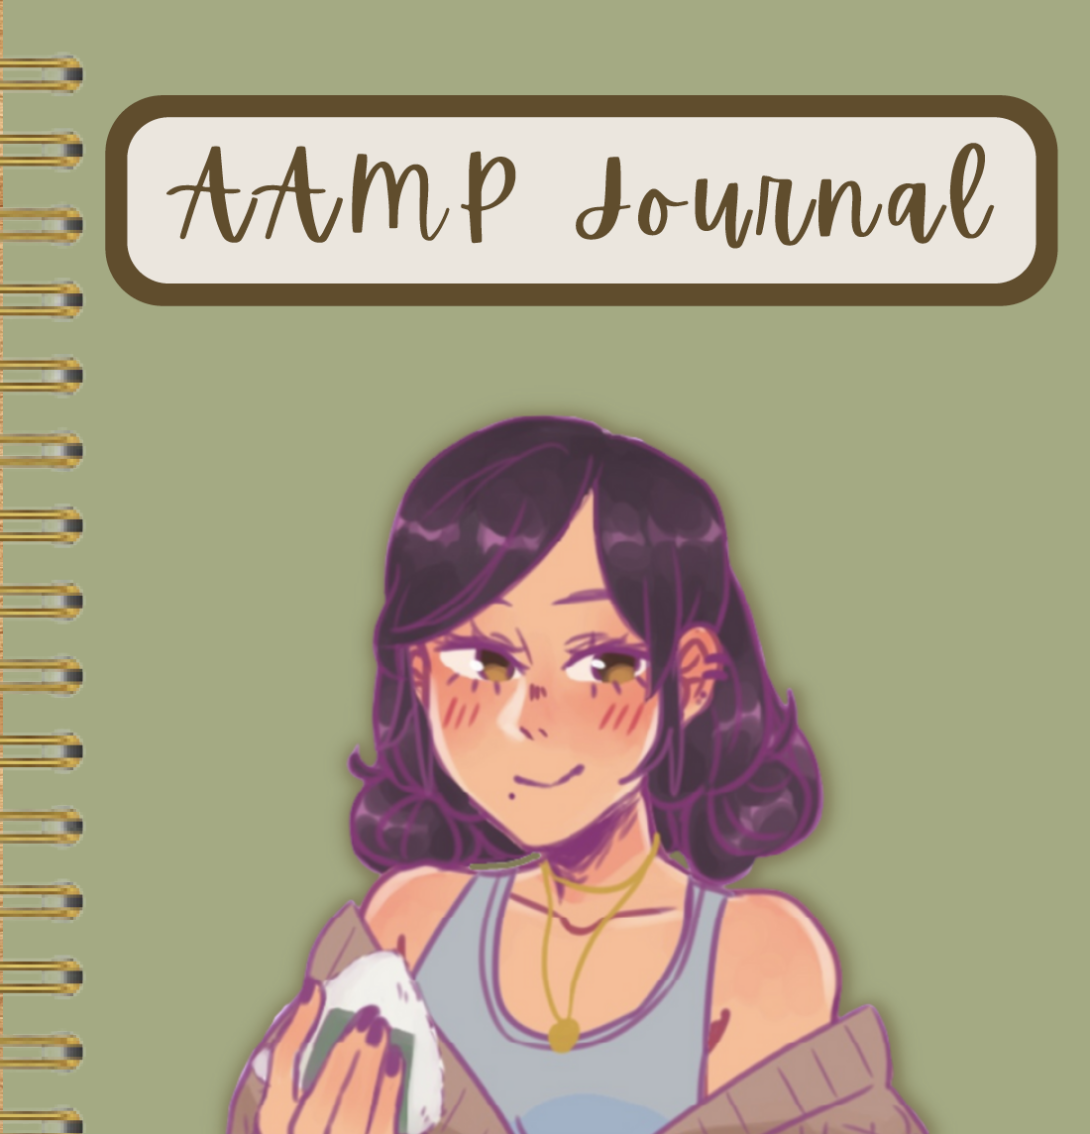 Amy Vongohn's AAMP Journal